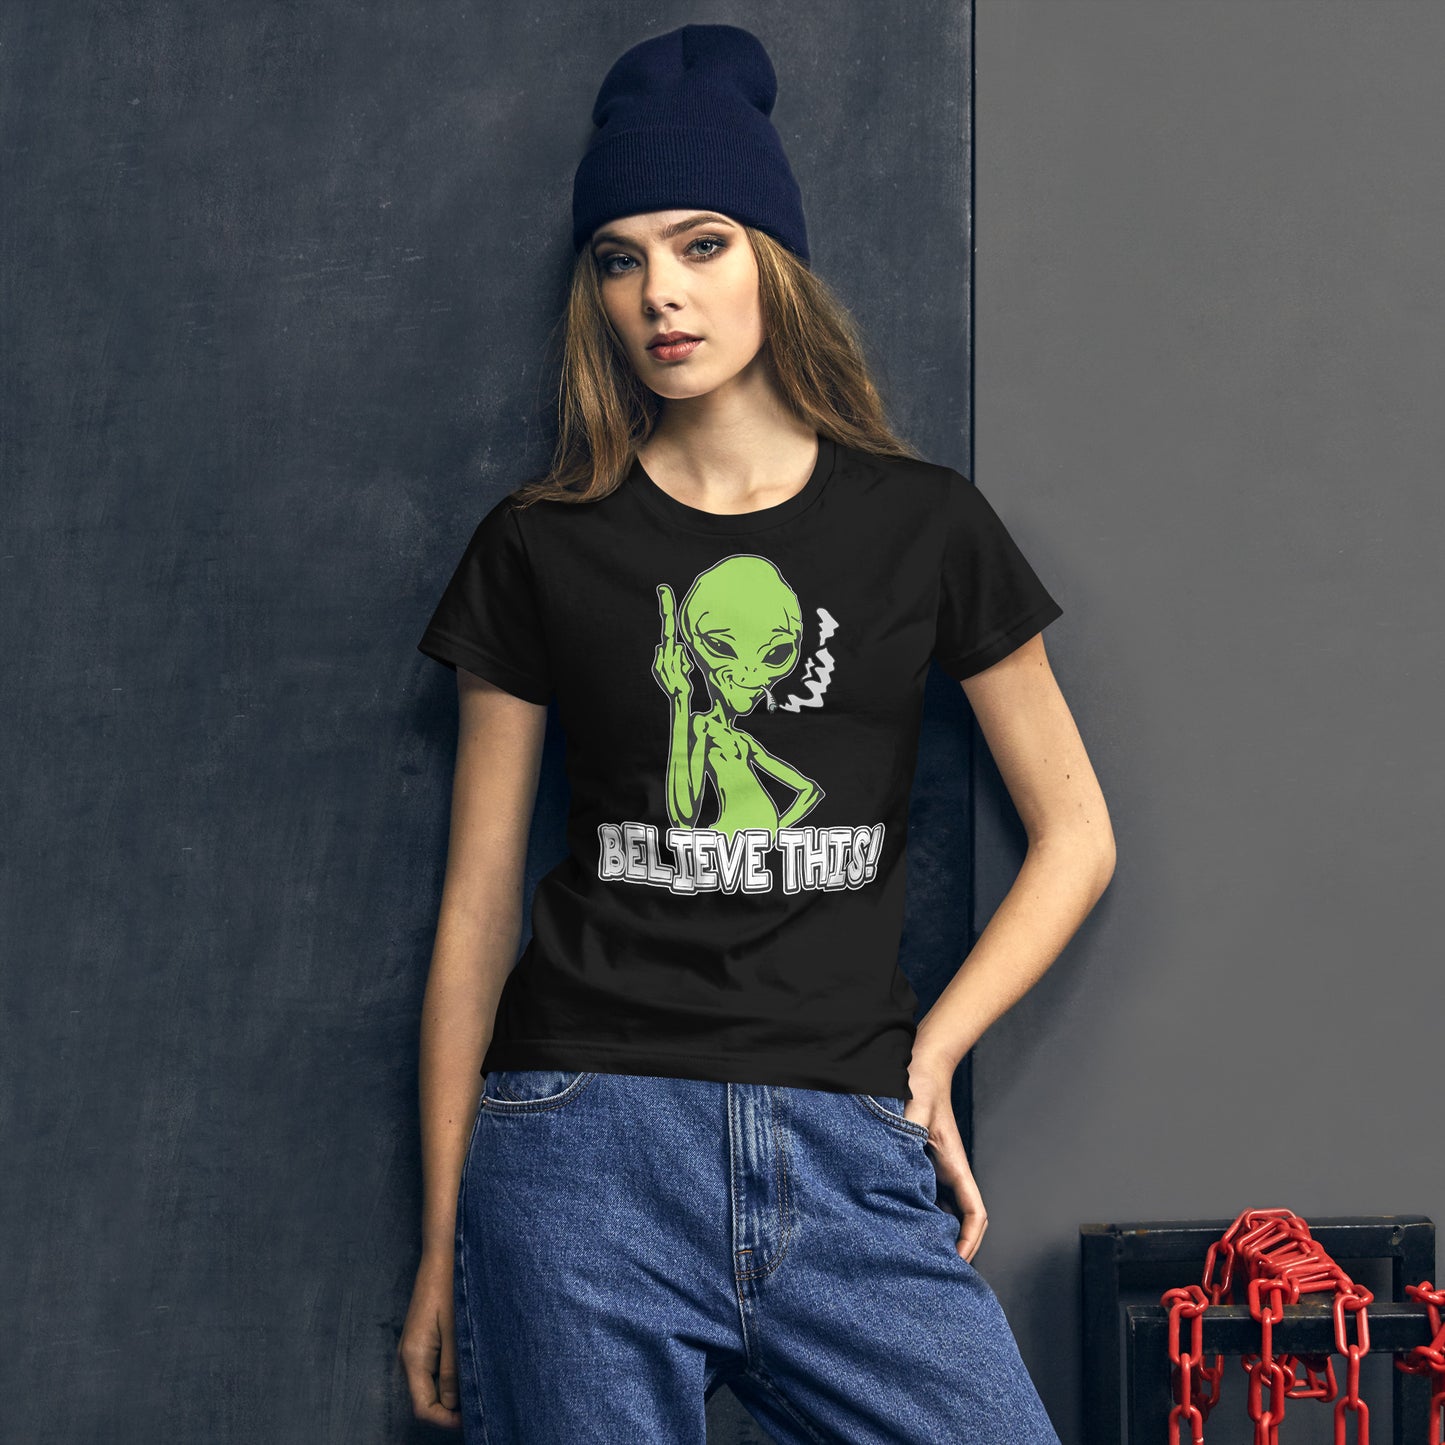 Believe This - Women's T-Shirt | TheShirtfather